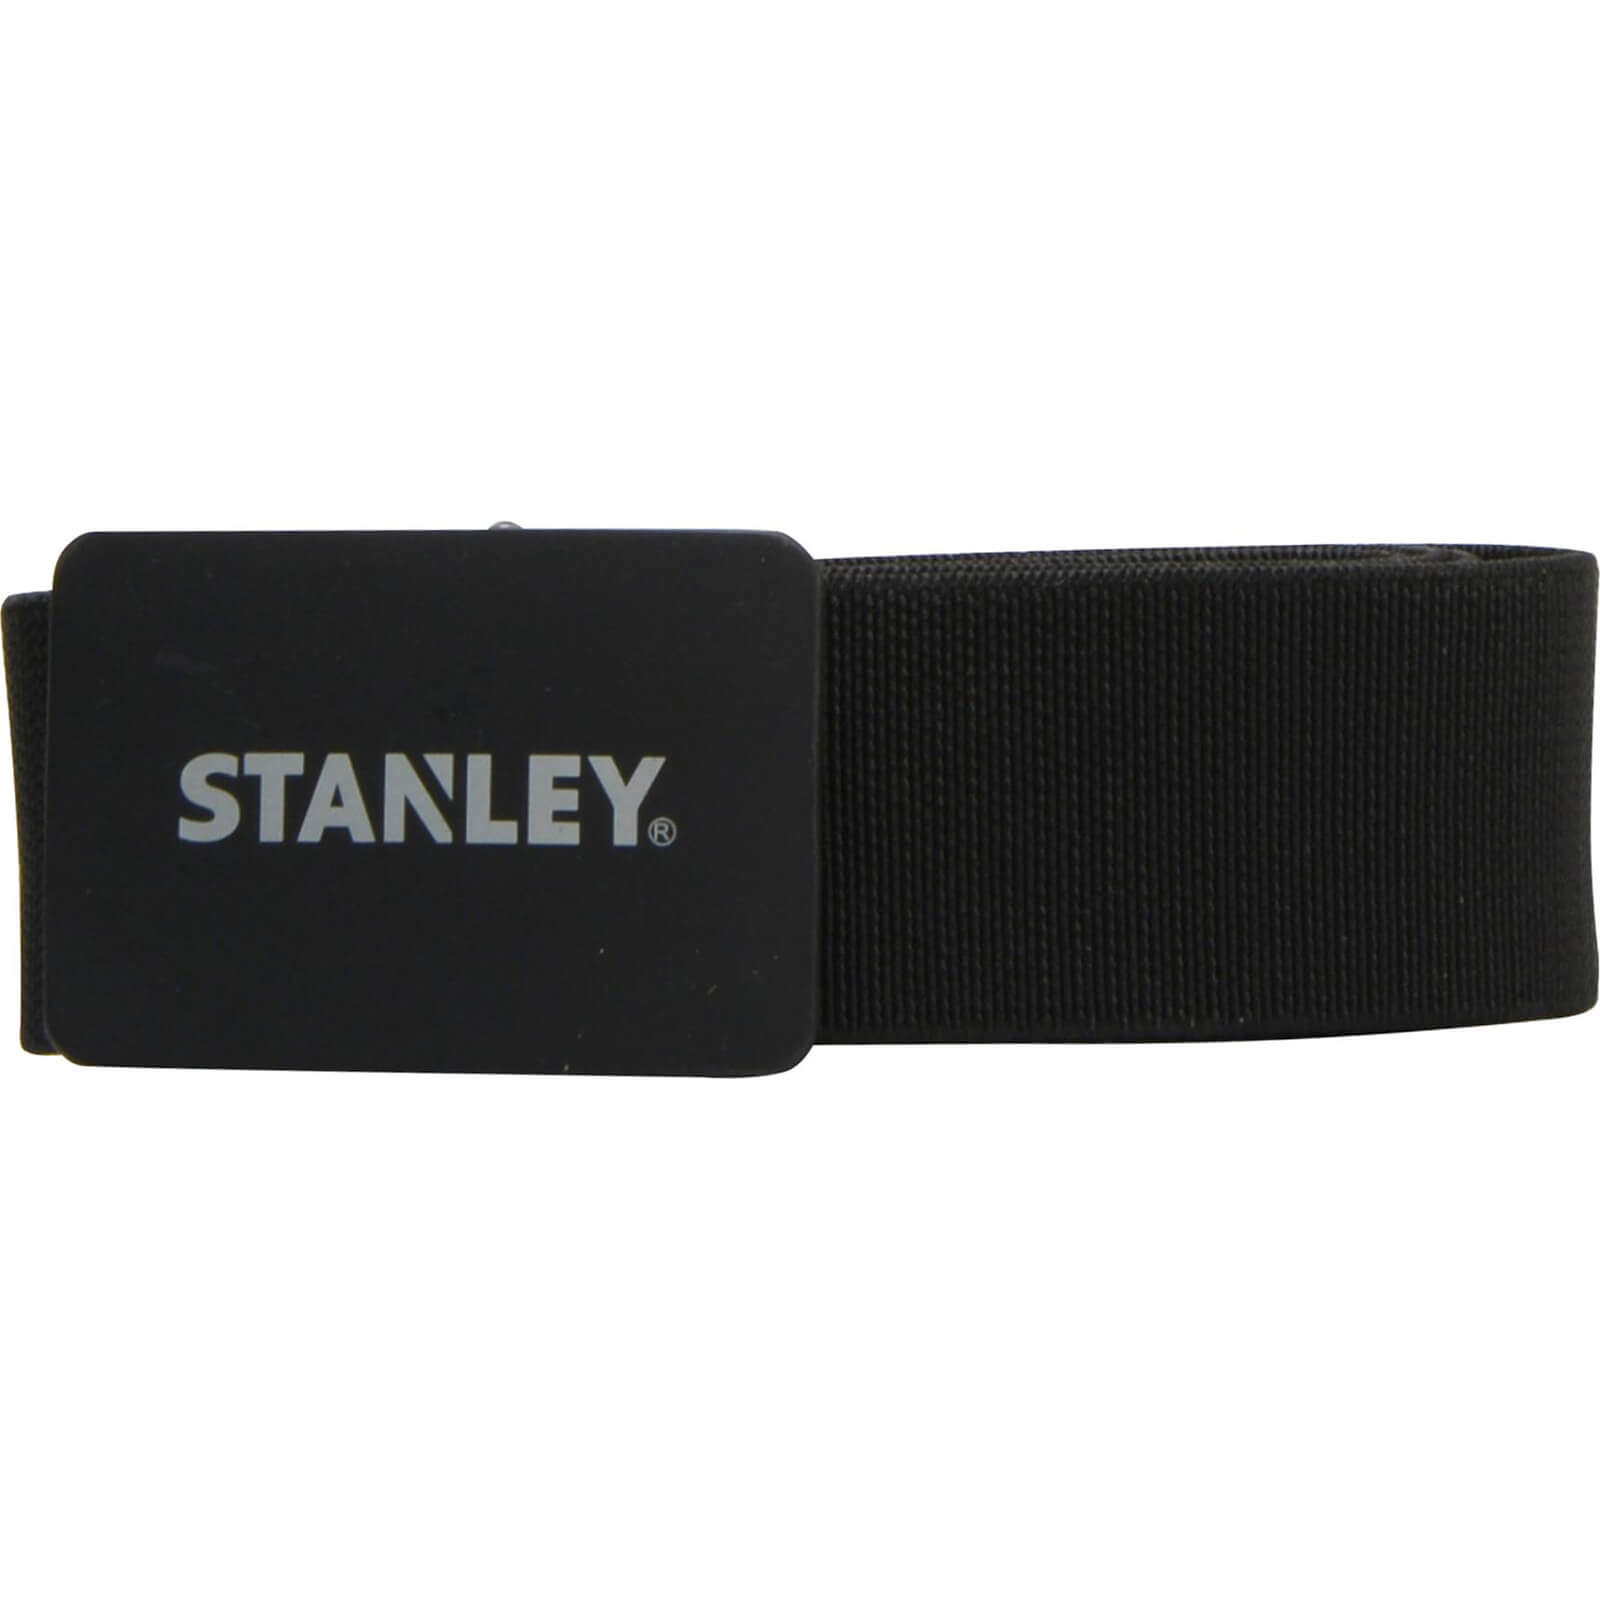 Stanley Elasticated Work Belt Black One Size